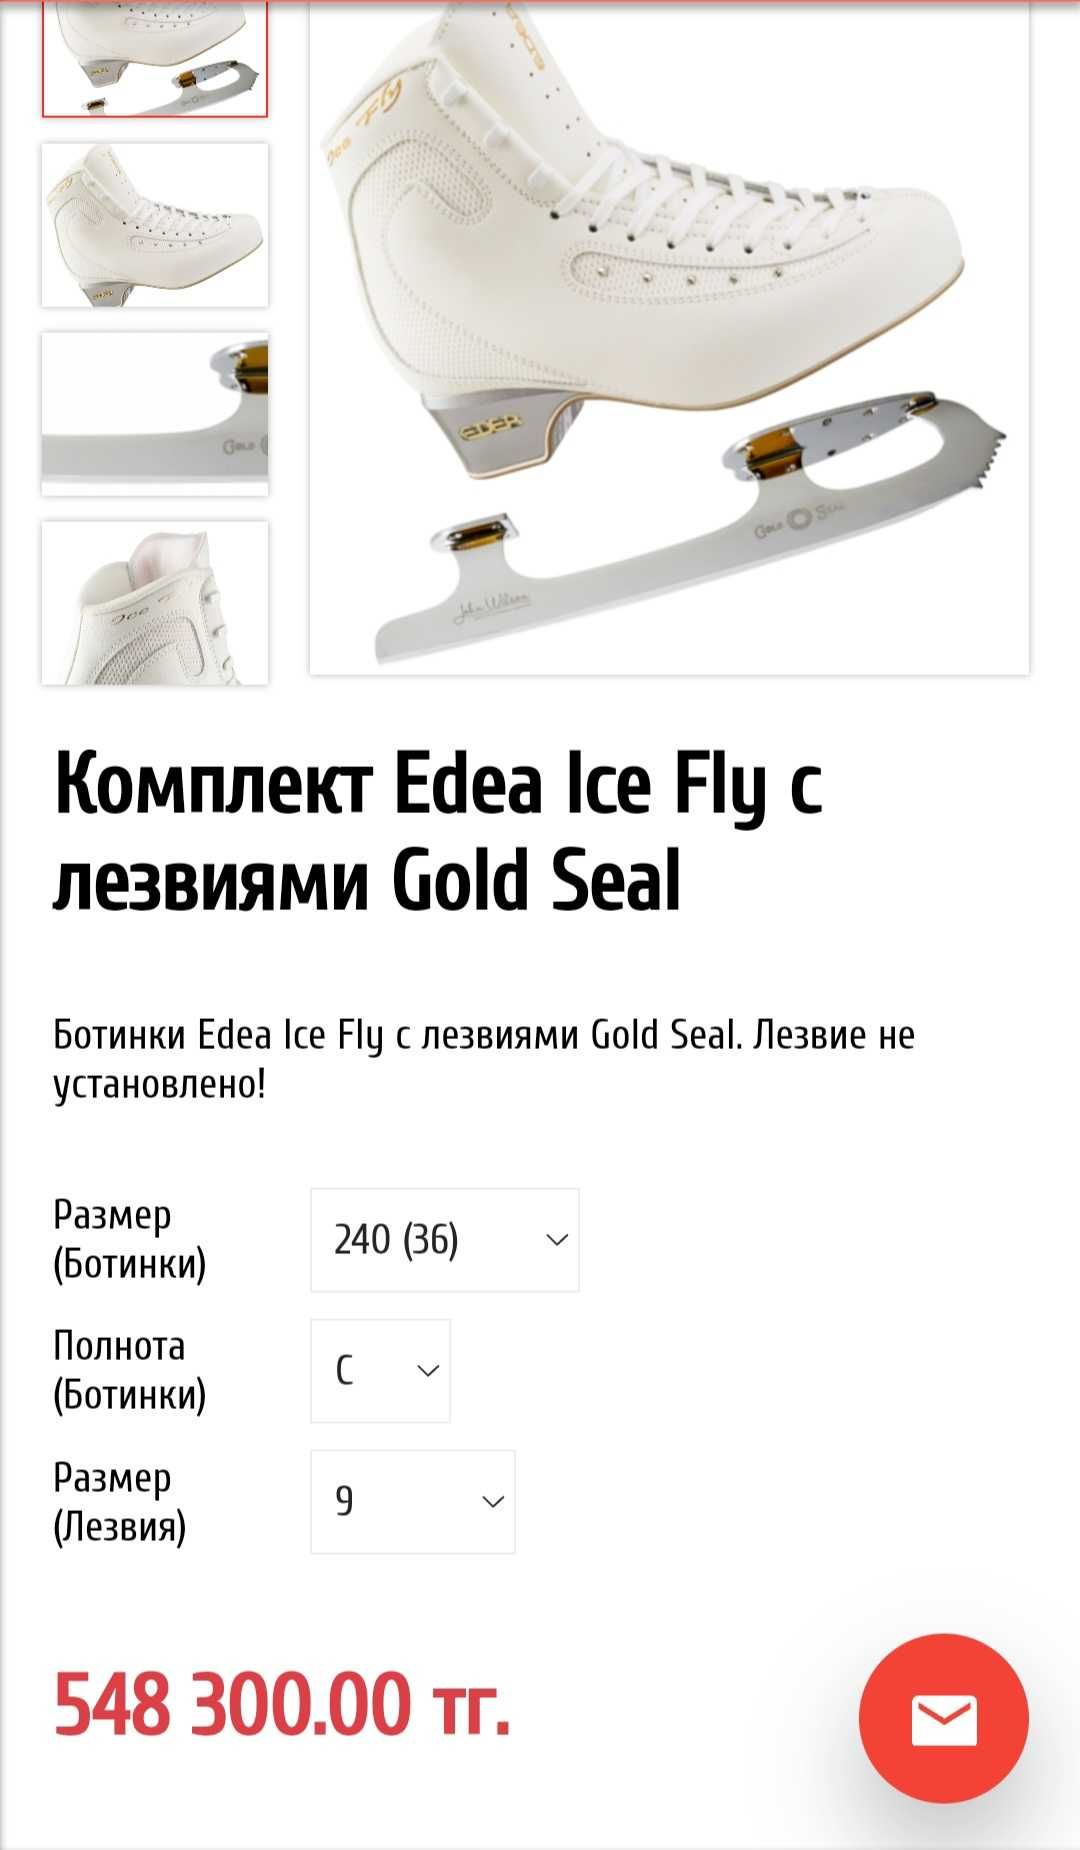 Комплект Edea Ice Fly с лезвиями Gold Seal